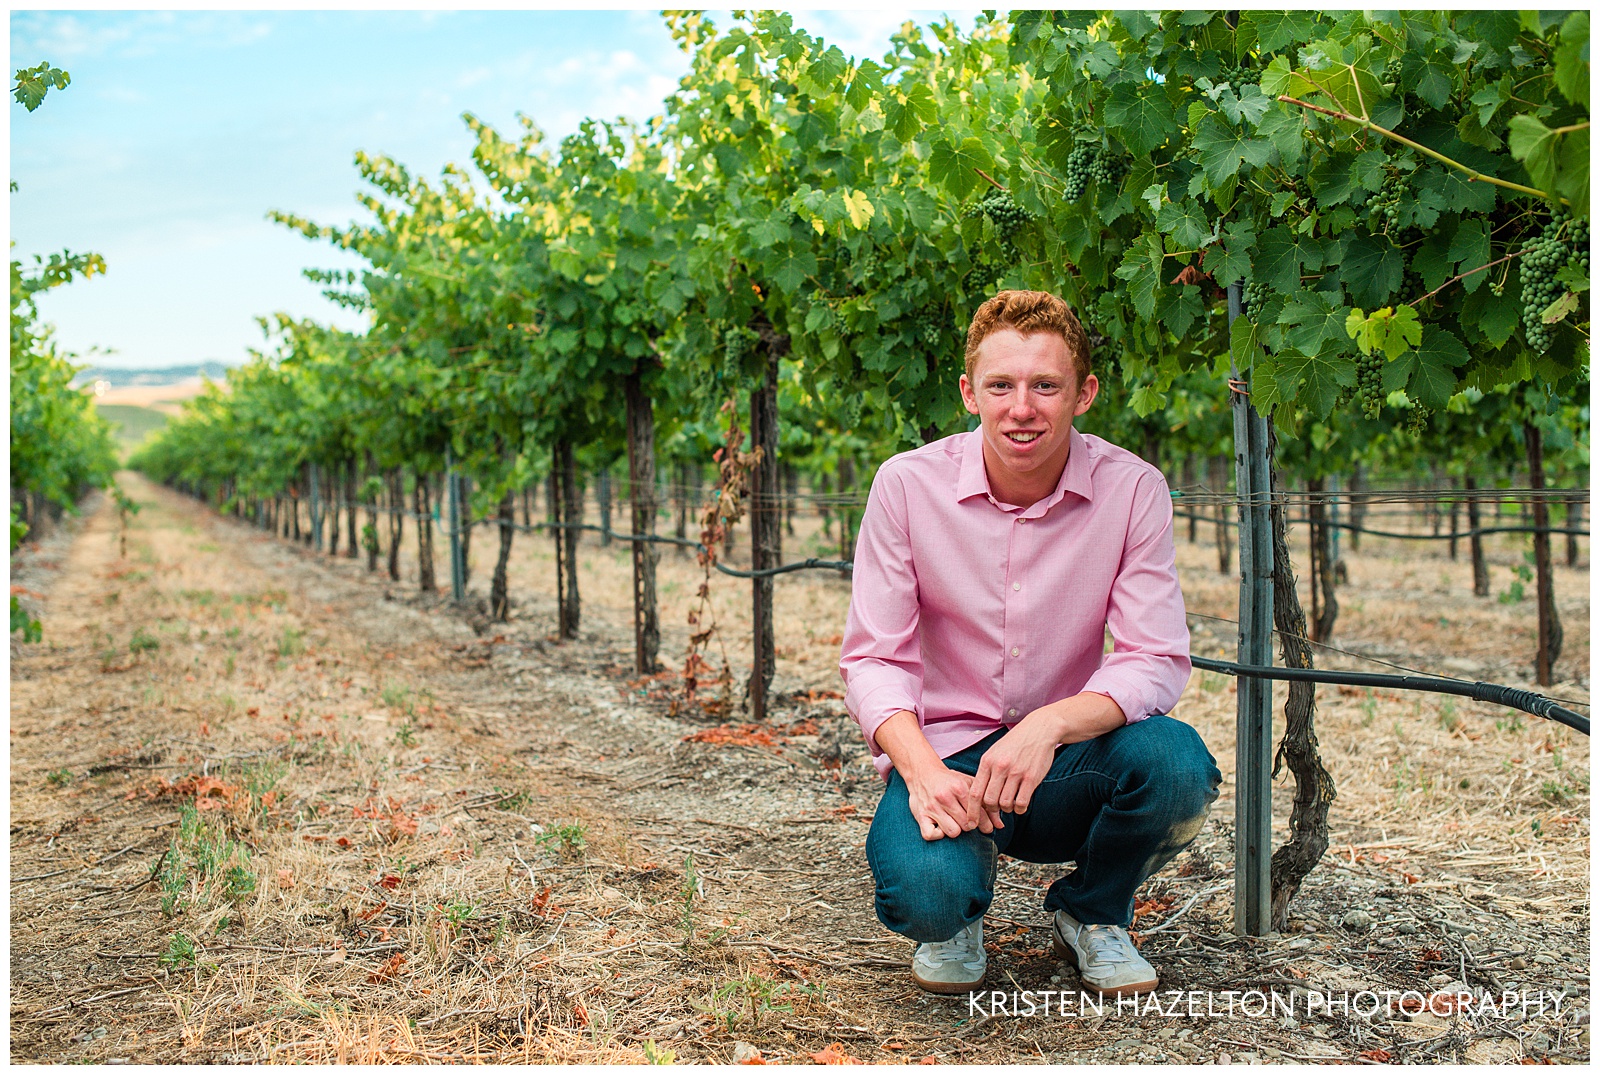 Male high school senior portraits in between rows of grape vines